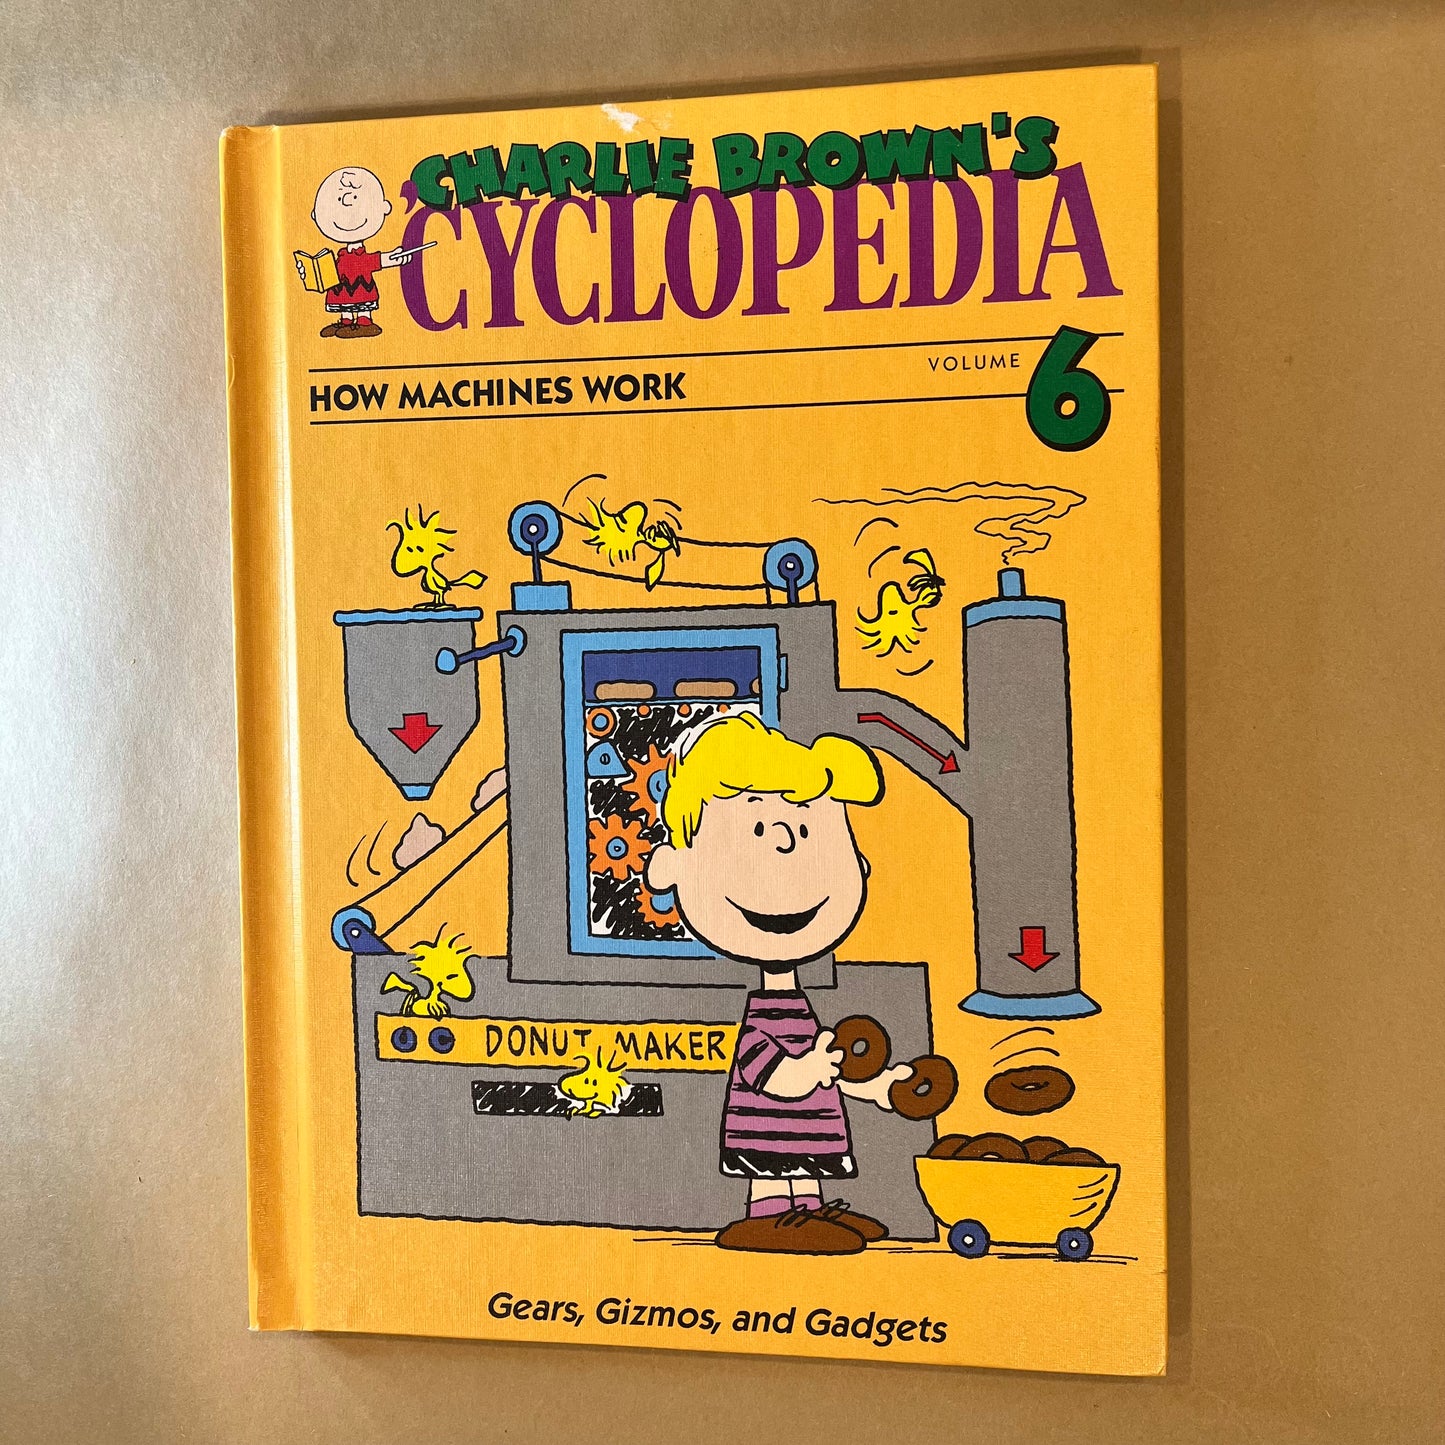 Charlie Brown's Cyclopedia